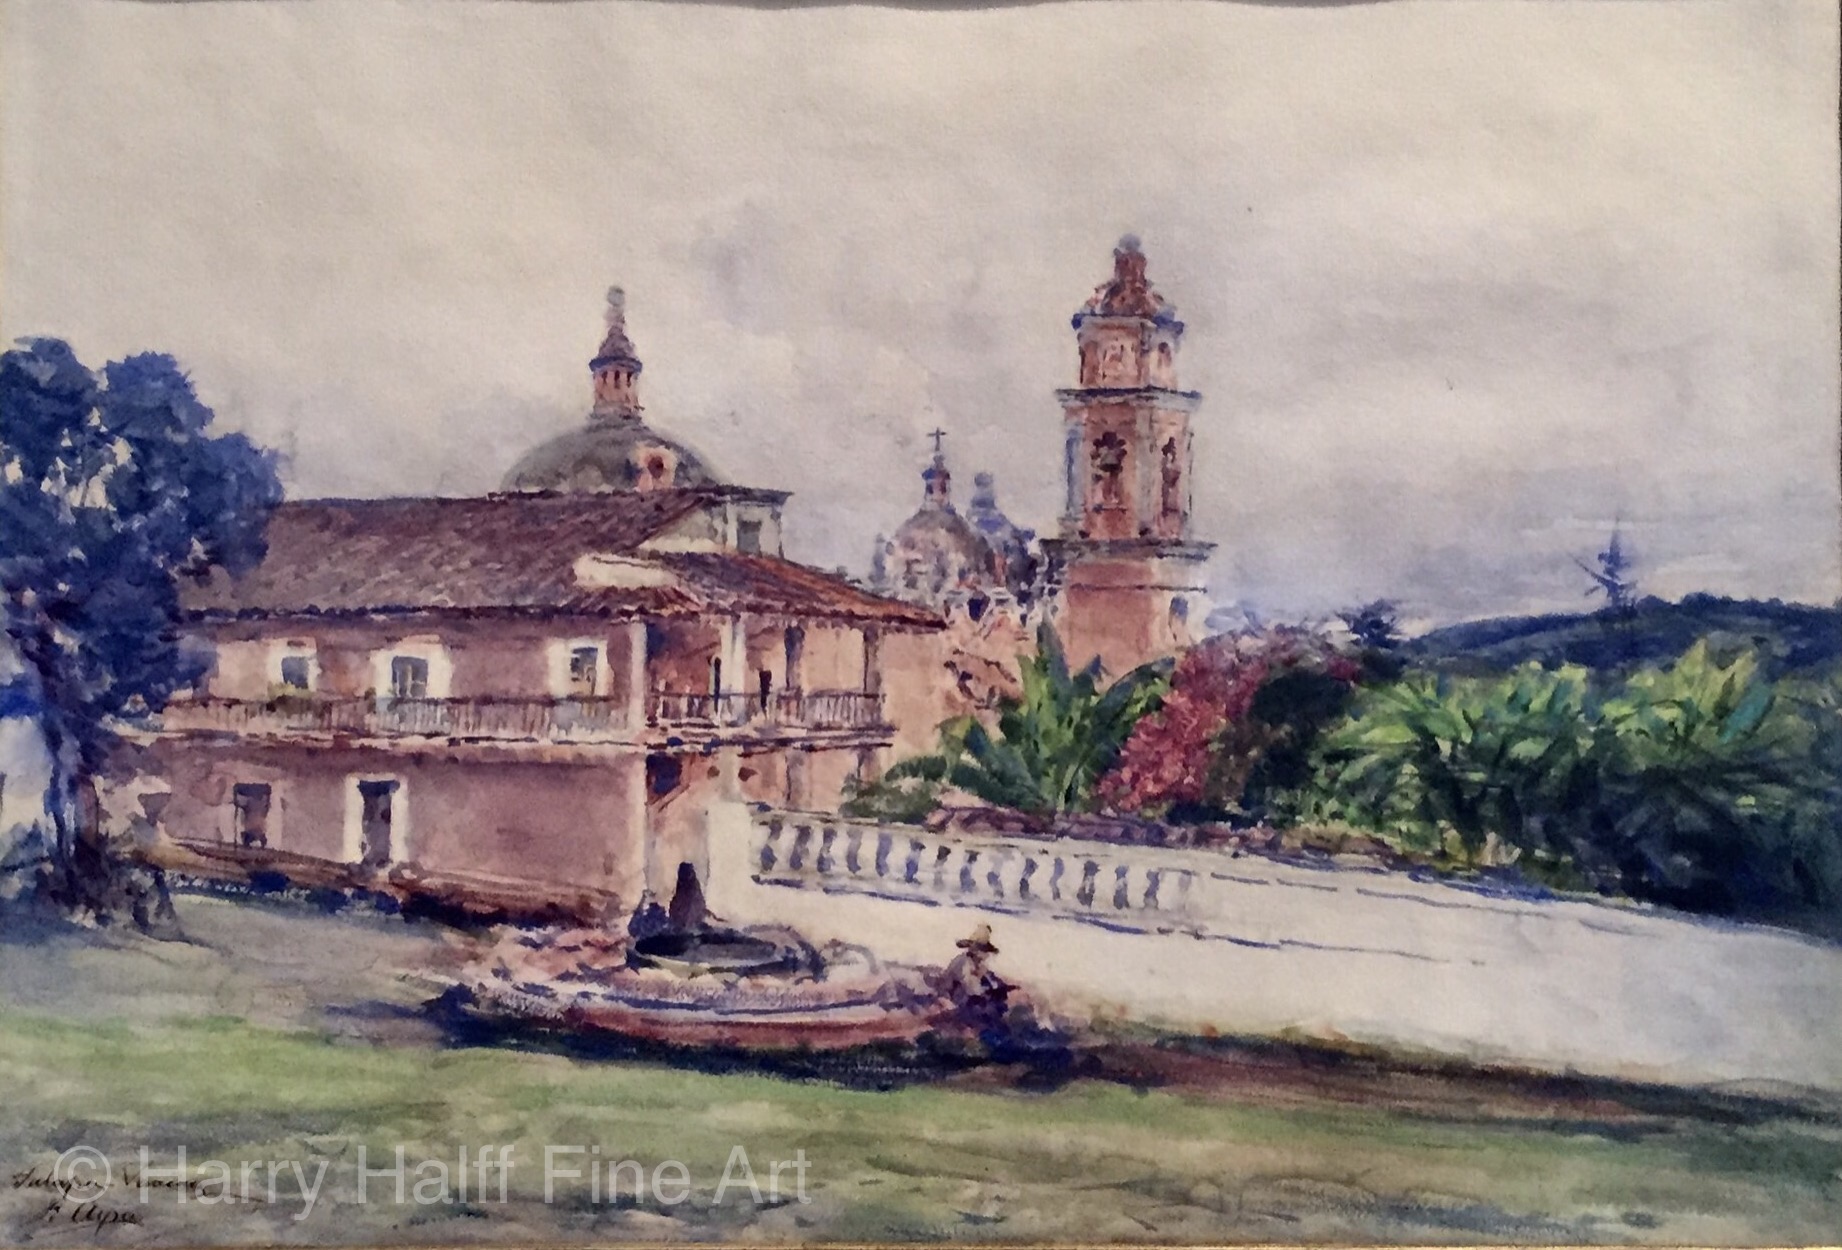 Jose Arpa's watercolor on paper painting of Jalapa-Veracruz